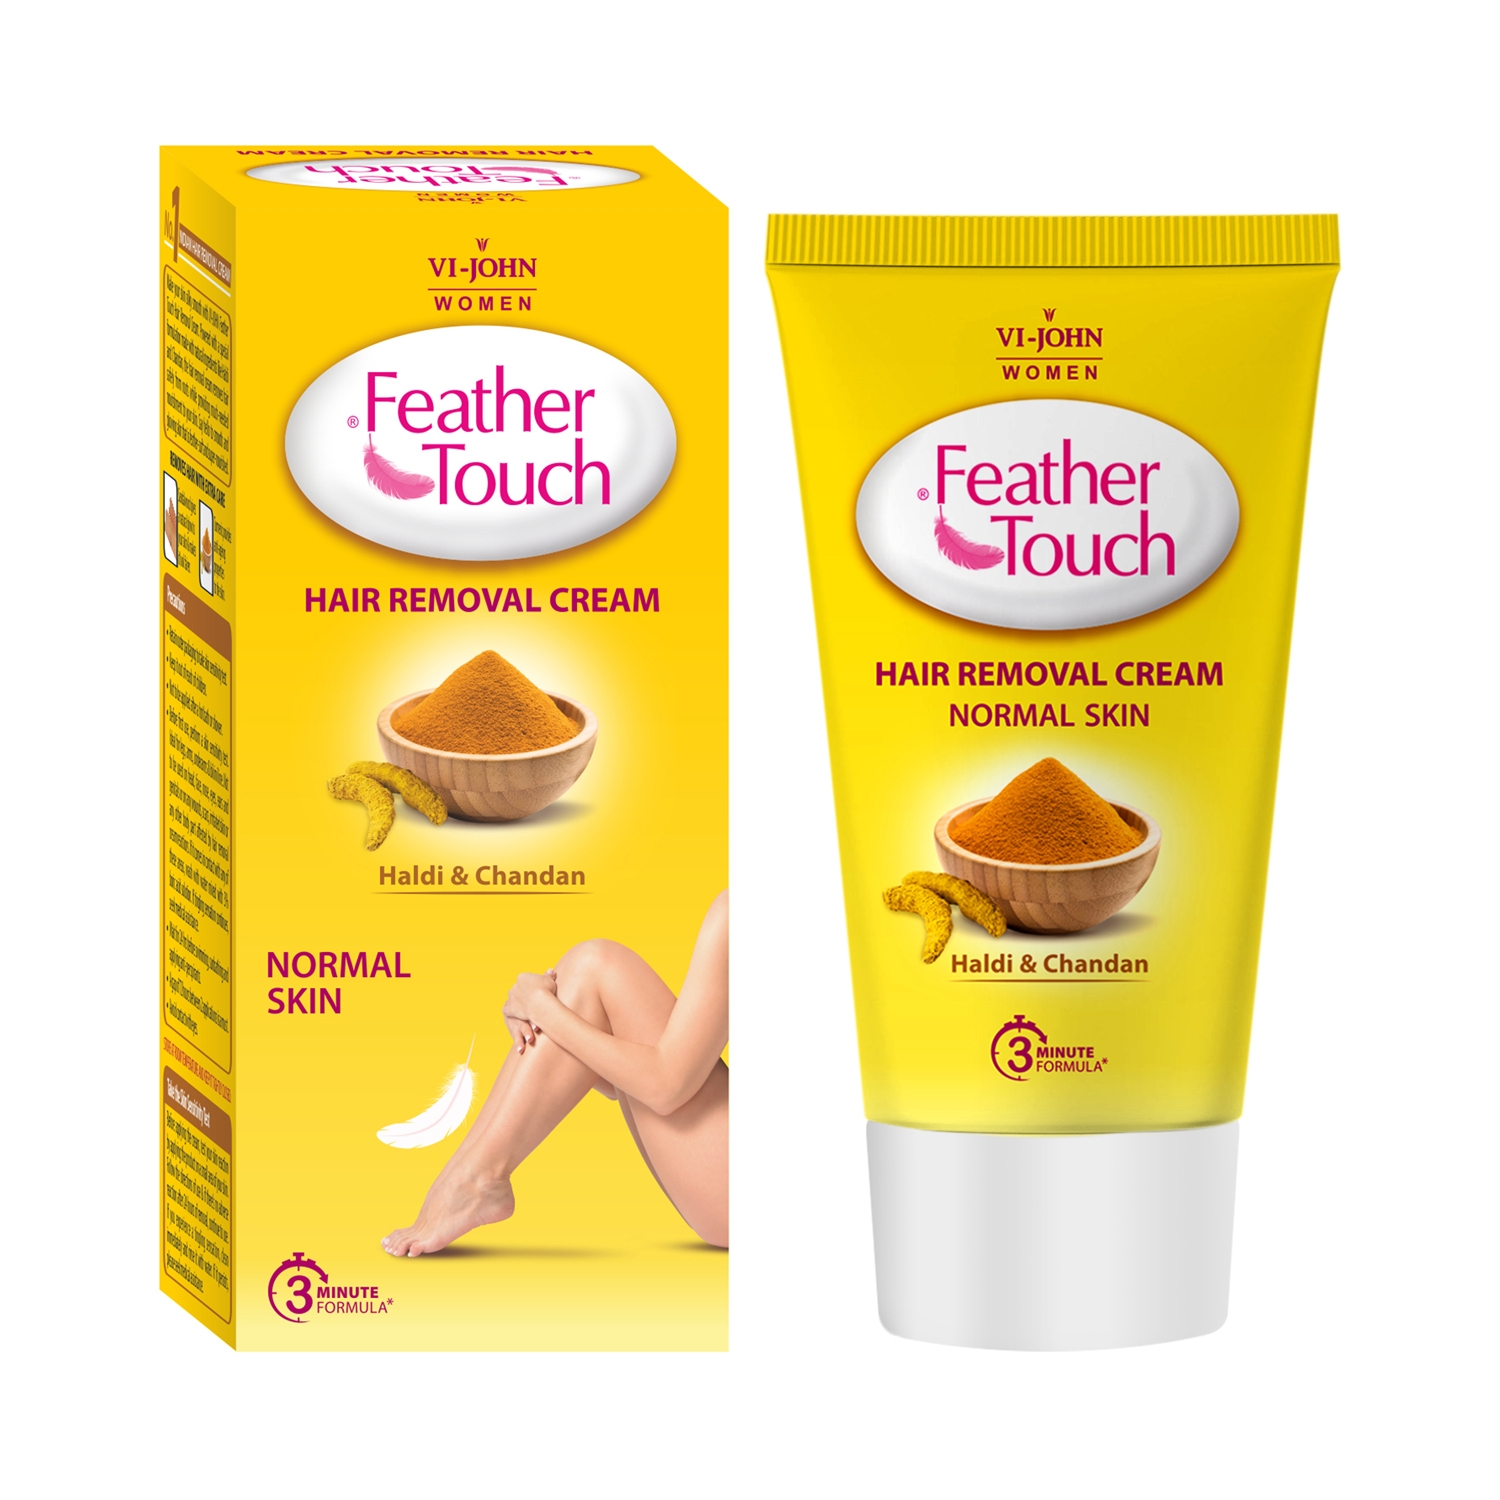 VI-JOHN | VI-JOHN Feather Touch Hair Removal Cream With Haldi & Chandan Tube For Normal Skin (40g)